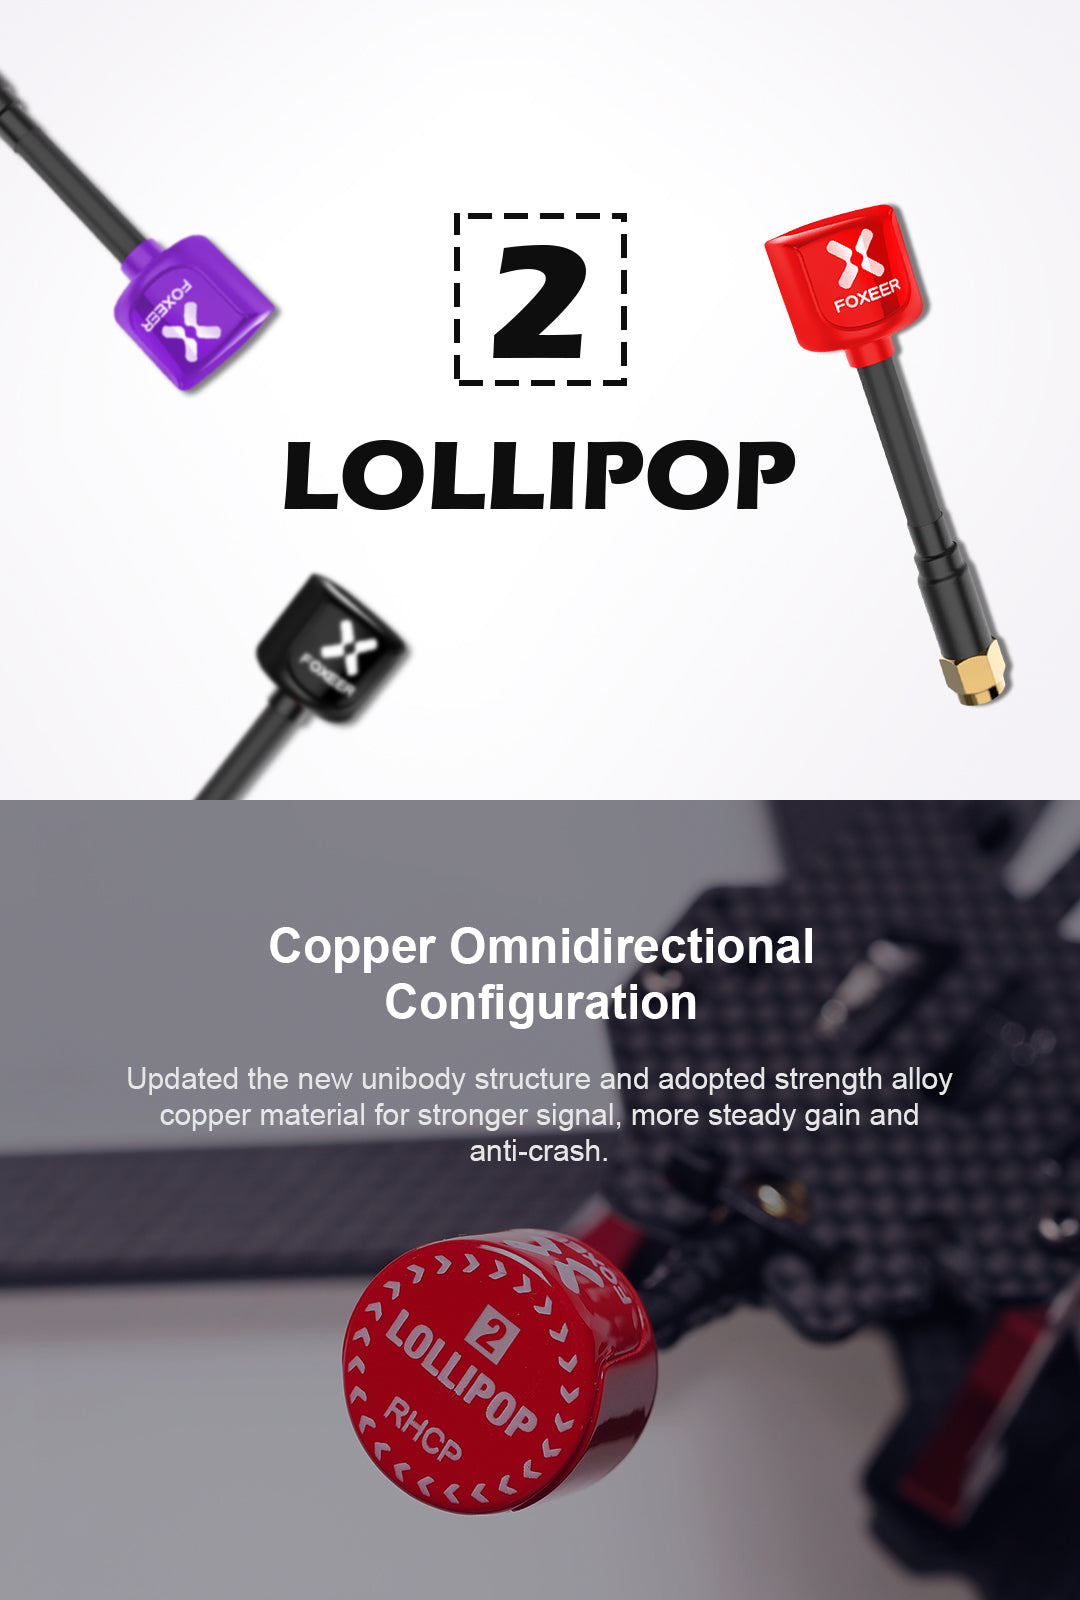 Foxeer Lollipop 2 RHCP 5.8GHz Antenna